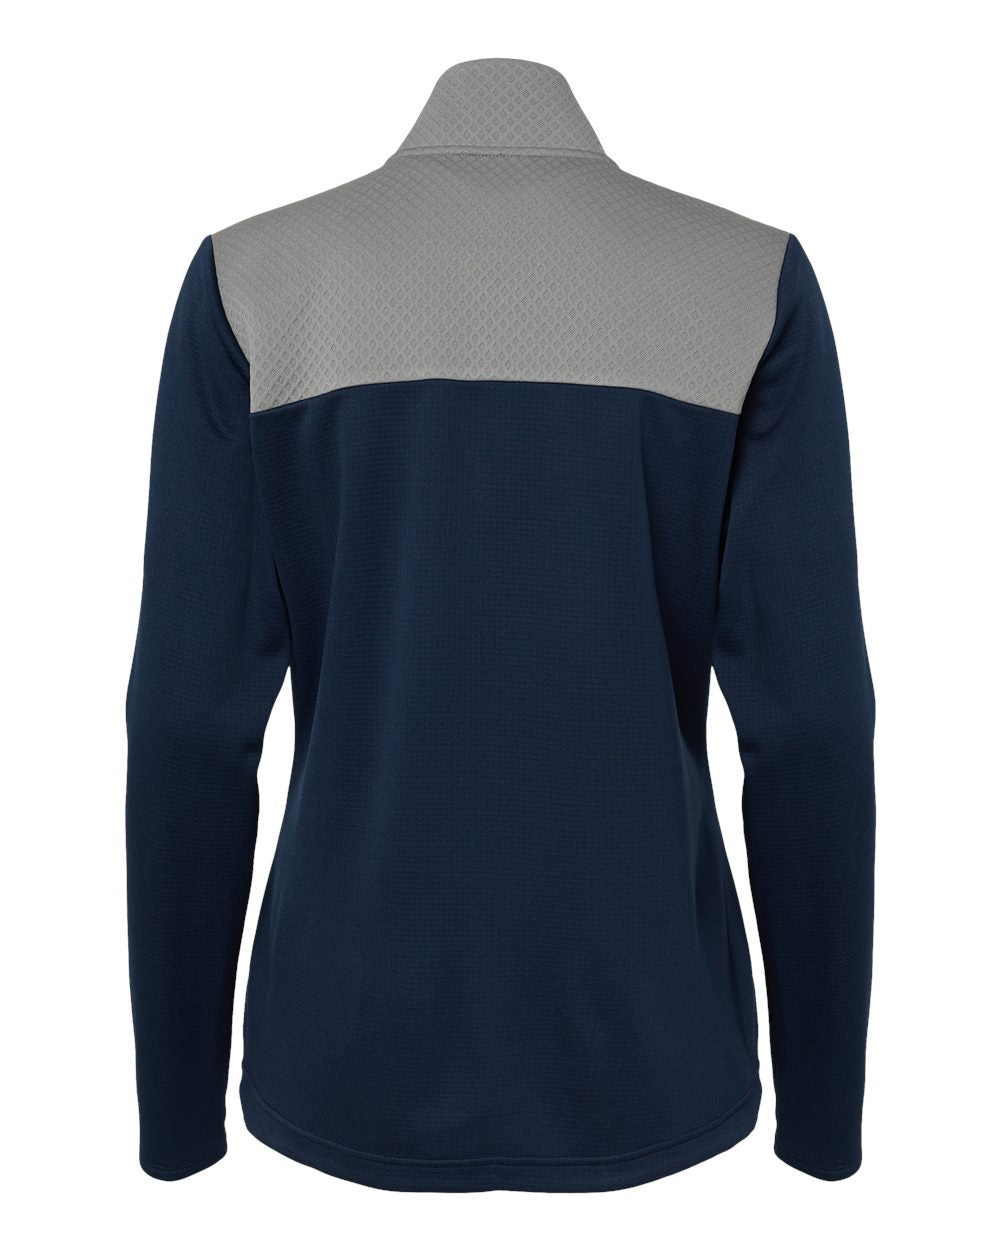 Adidas A529 Women's Textured Mixed Media Full-Zip Jacket #color_Collegiate Navy/ Grey Three